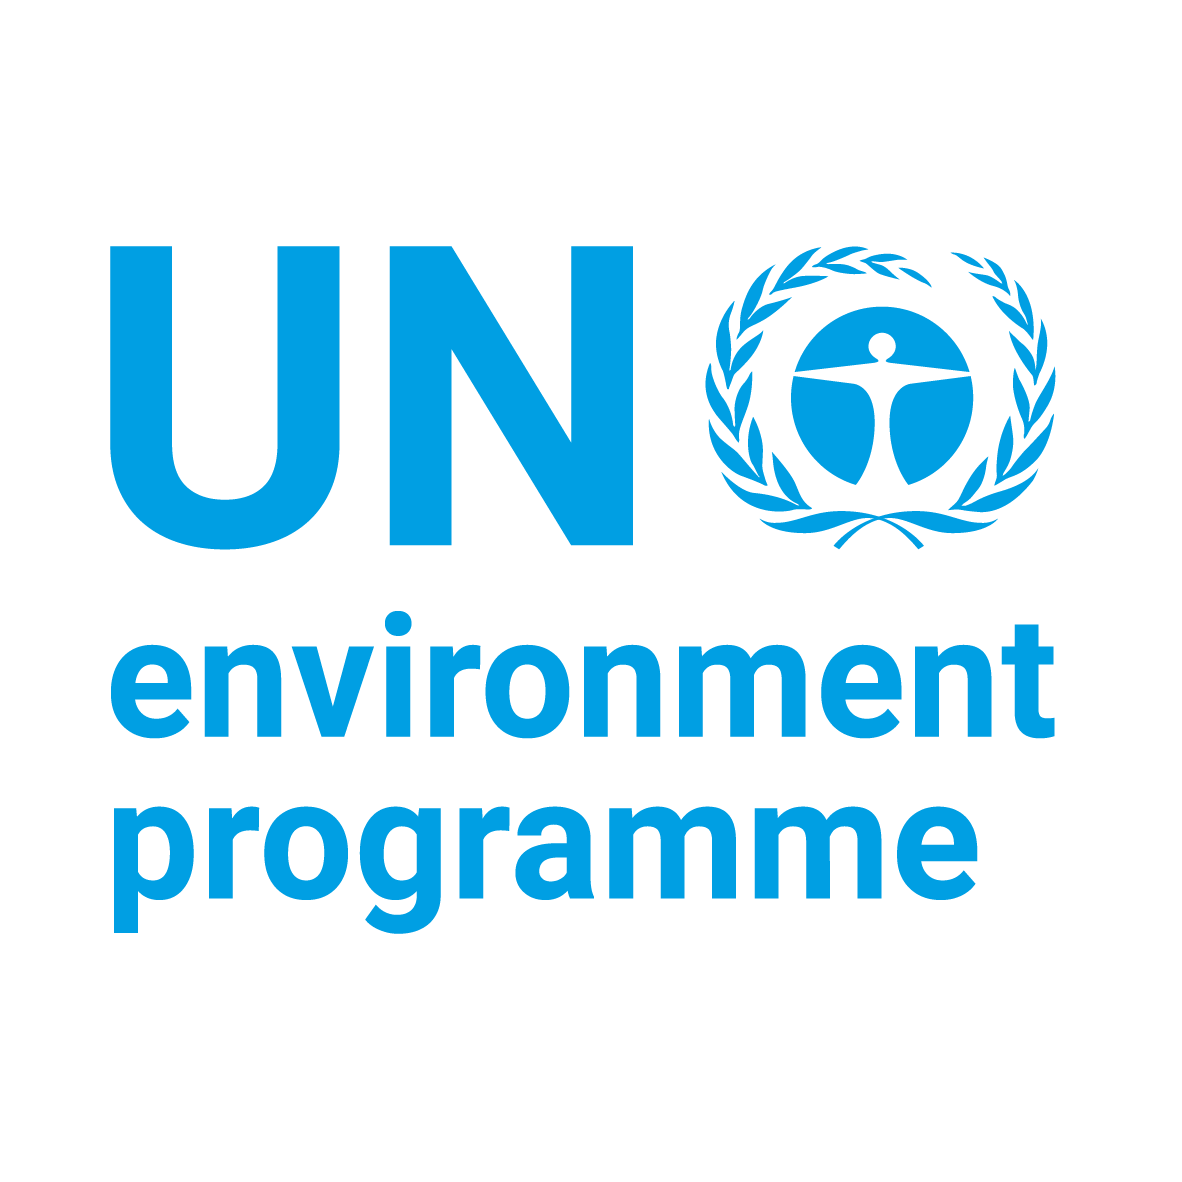 UN Environment Programme logo featuring blue text and a laurel wreath surrounding a human figure design.